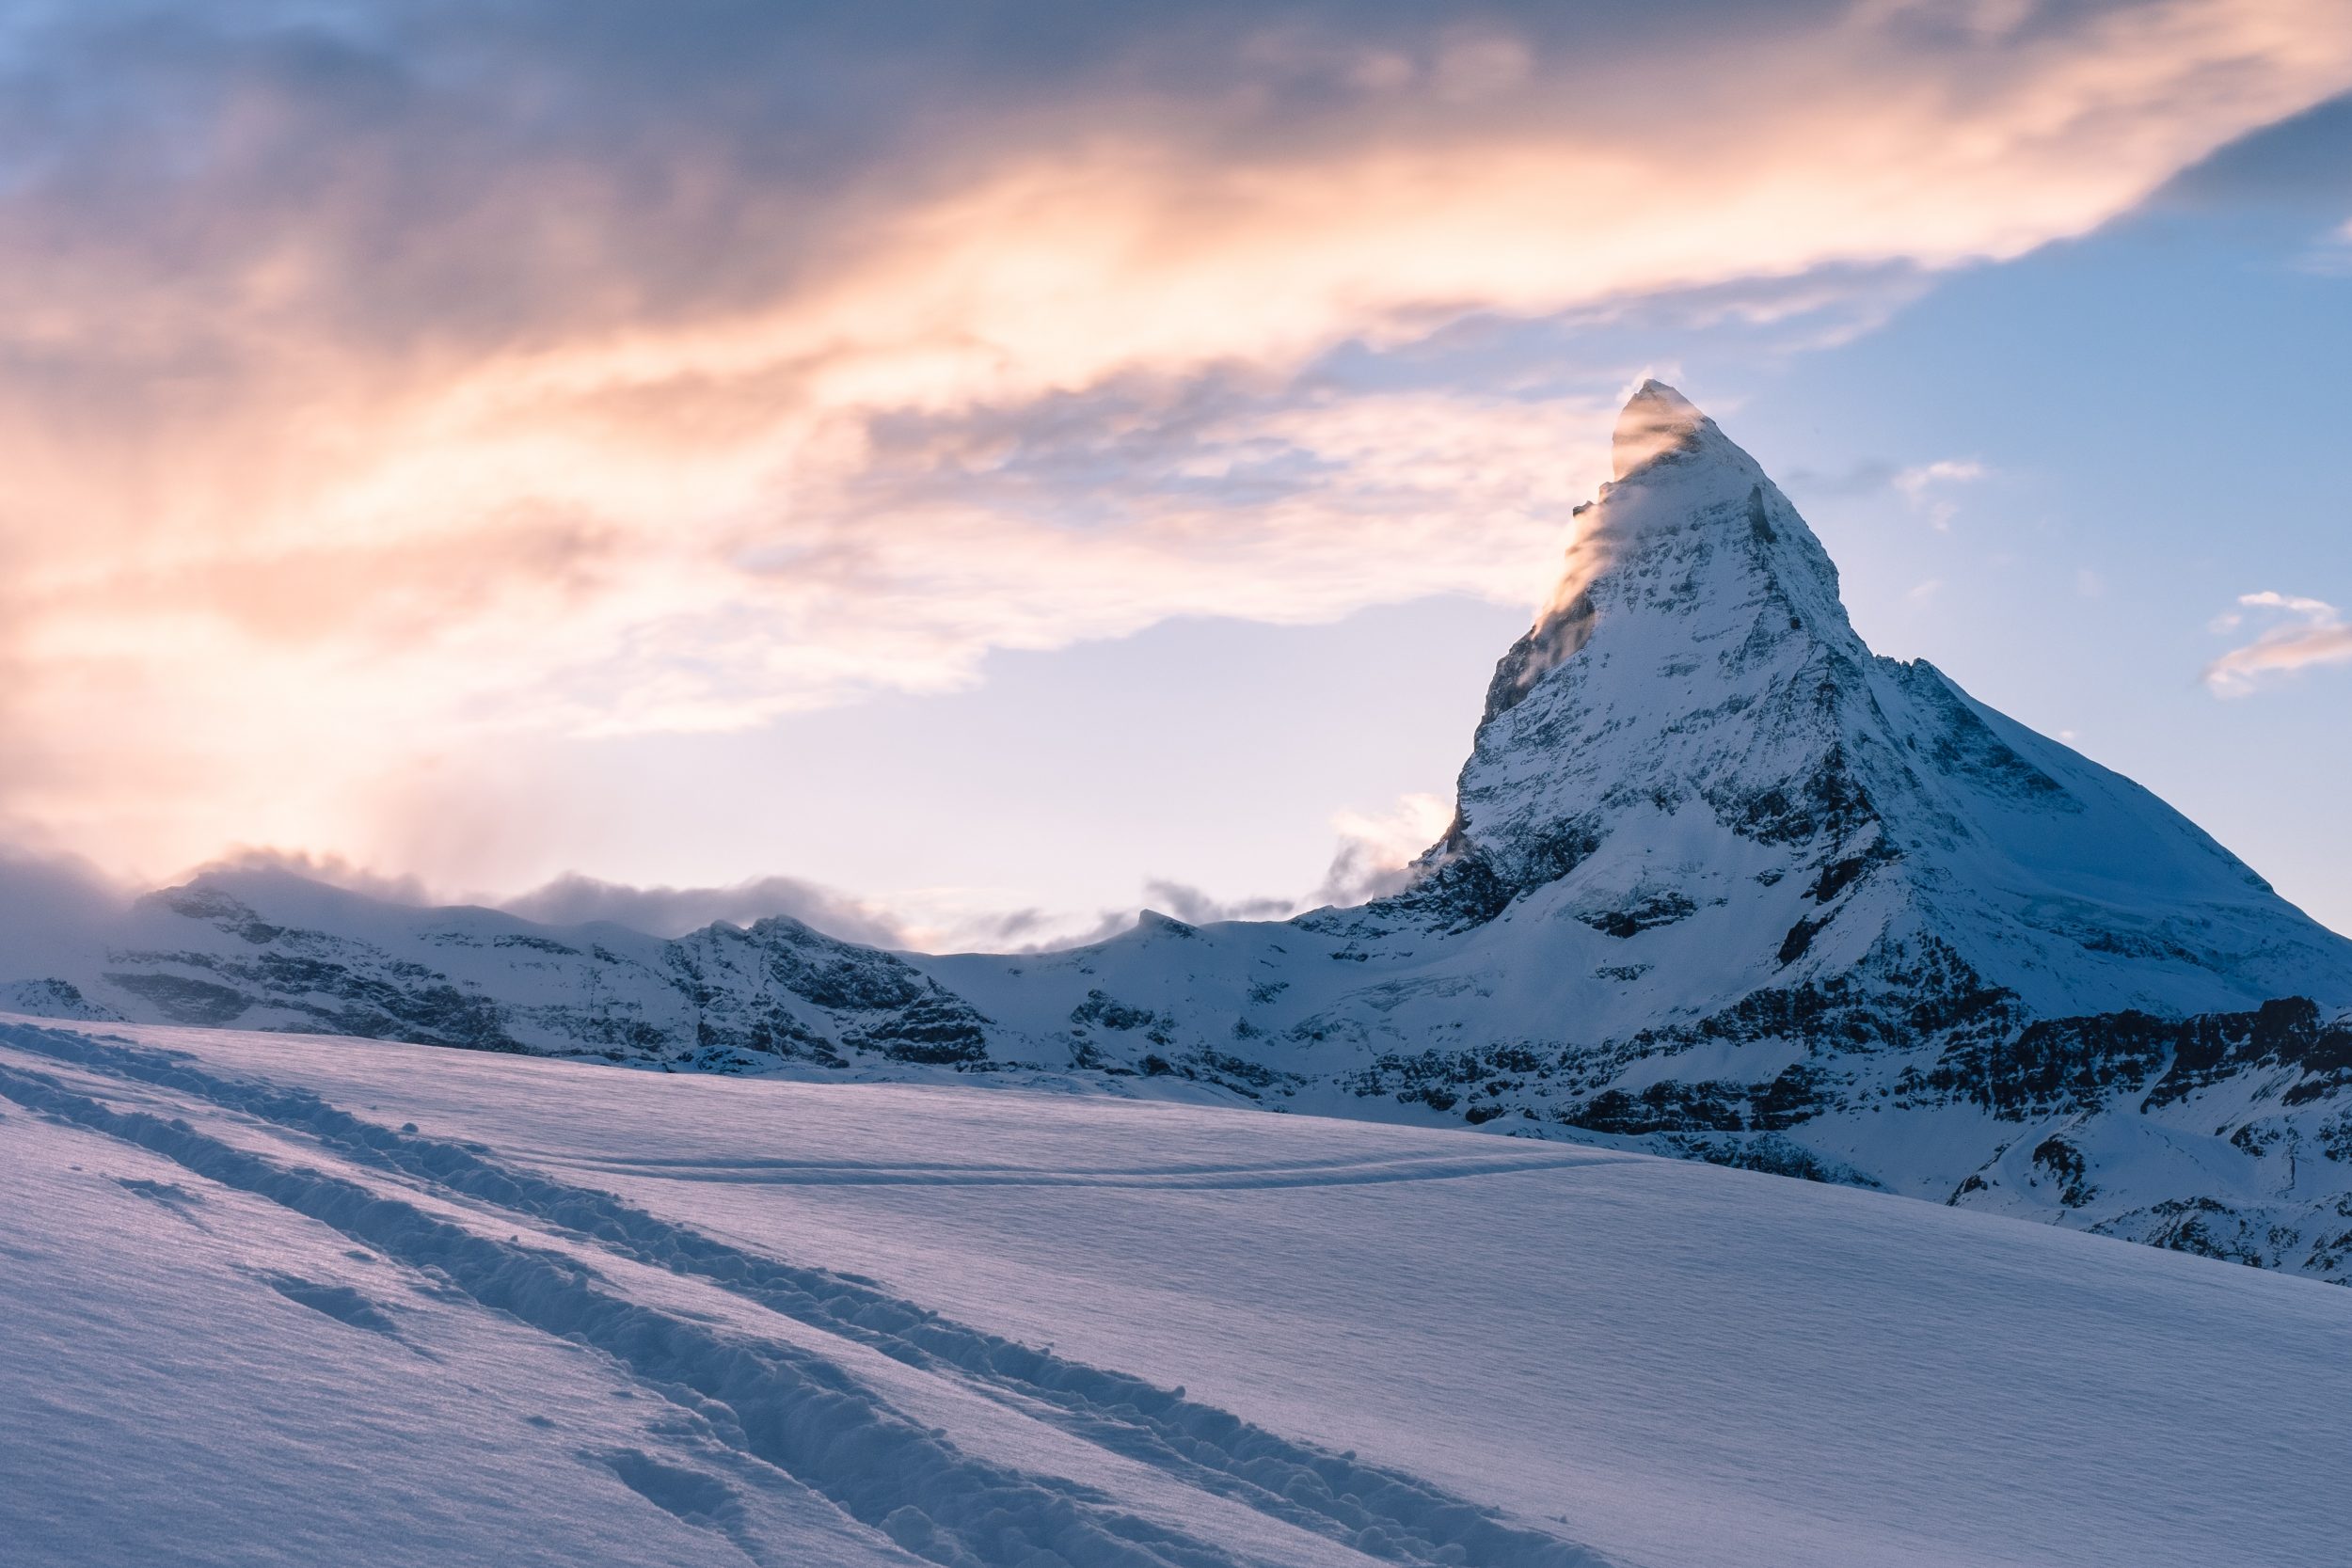 The Matterhorn in all its splendour. Photo by Samuel Zeller- Unsplash